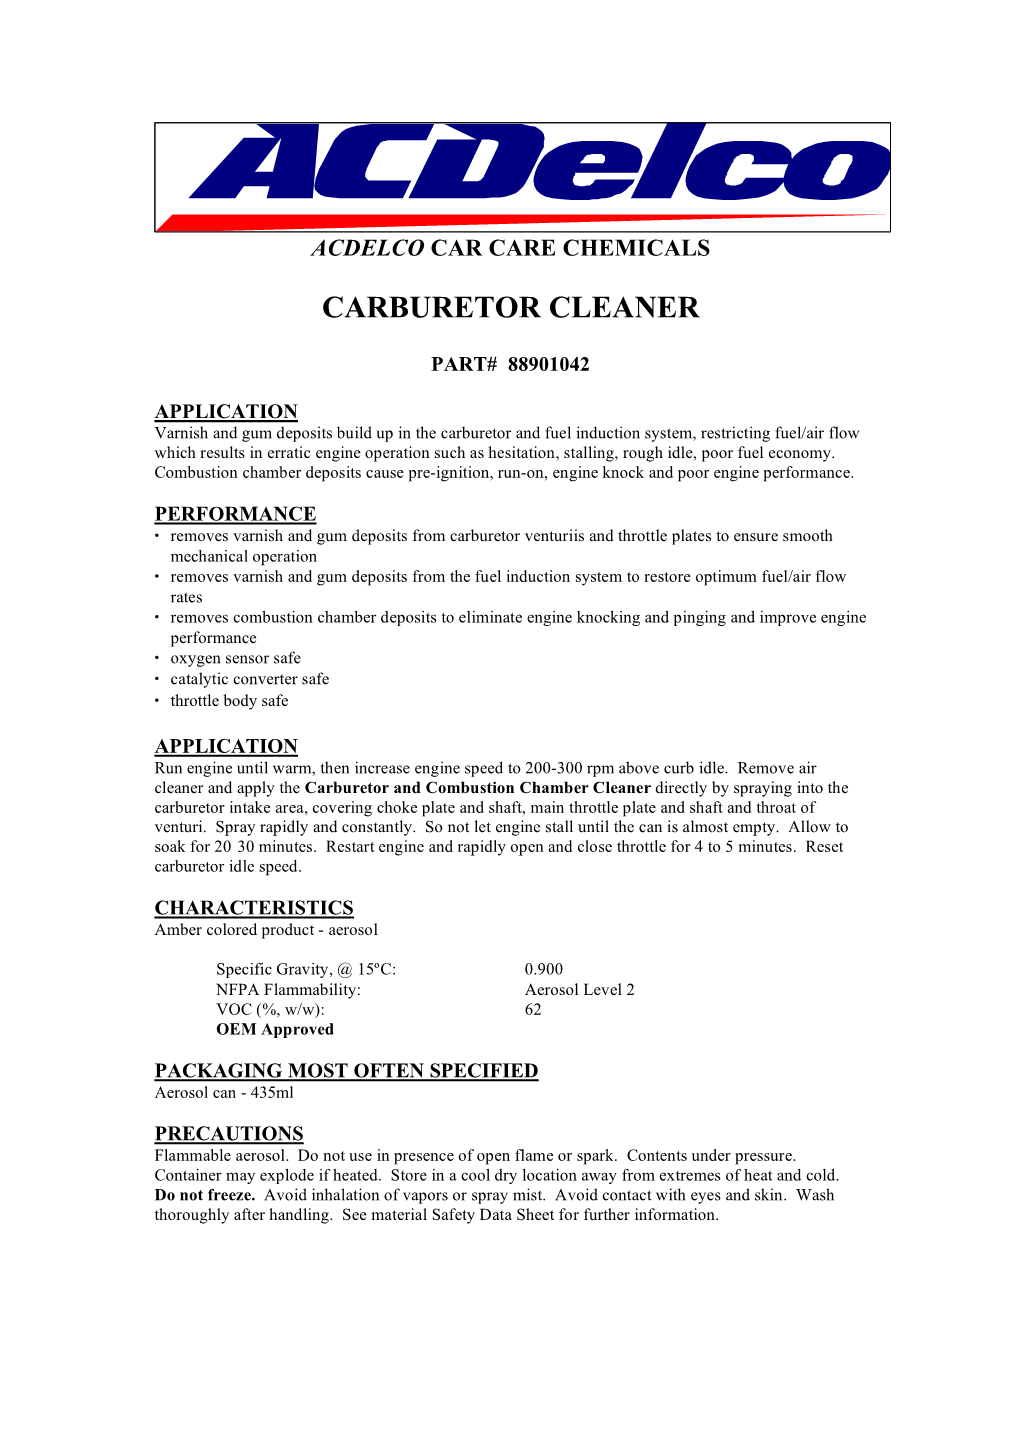 Carburetor Cleaner